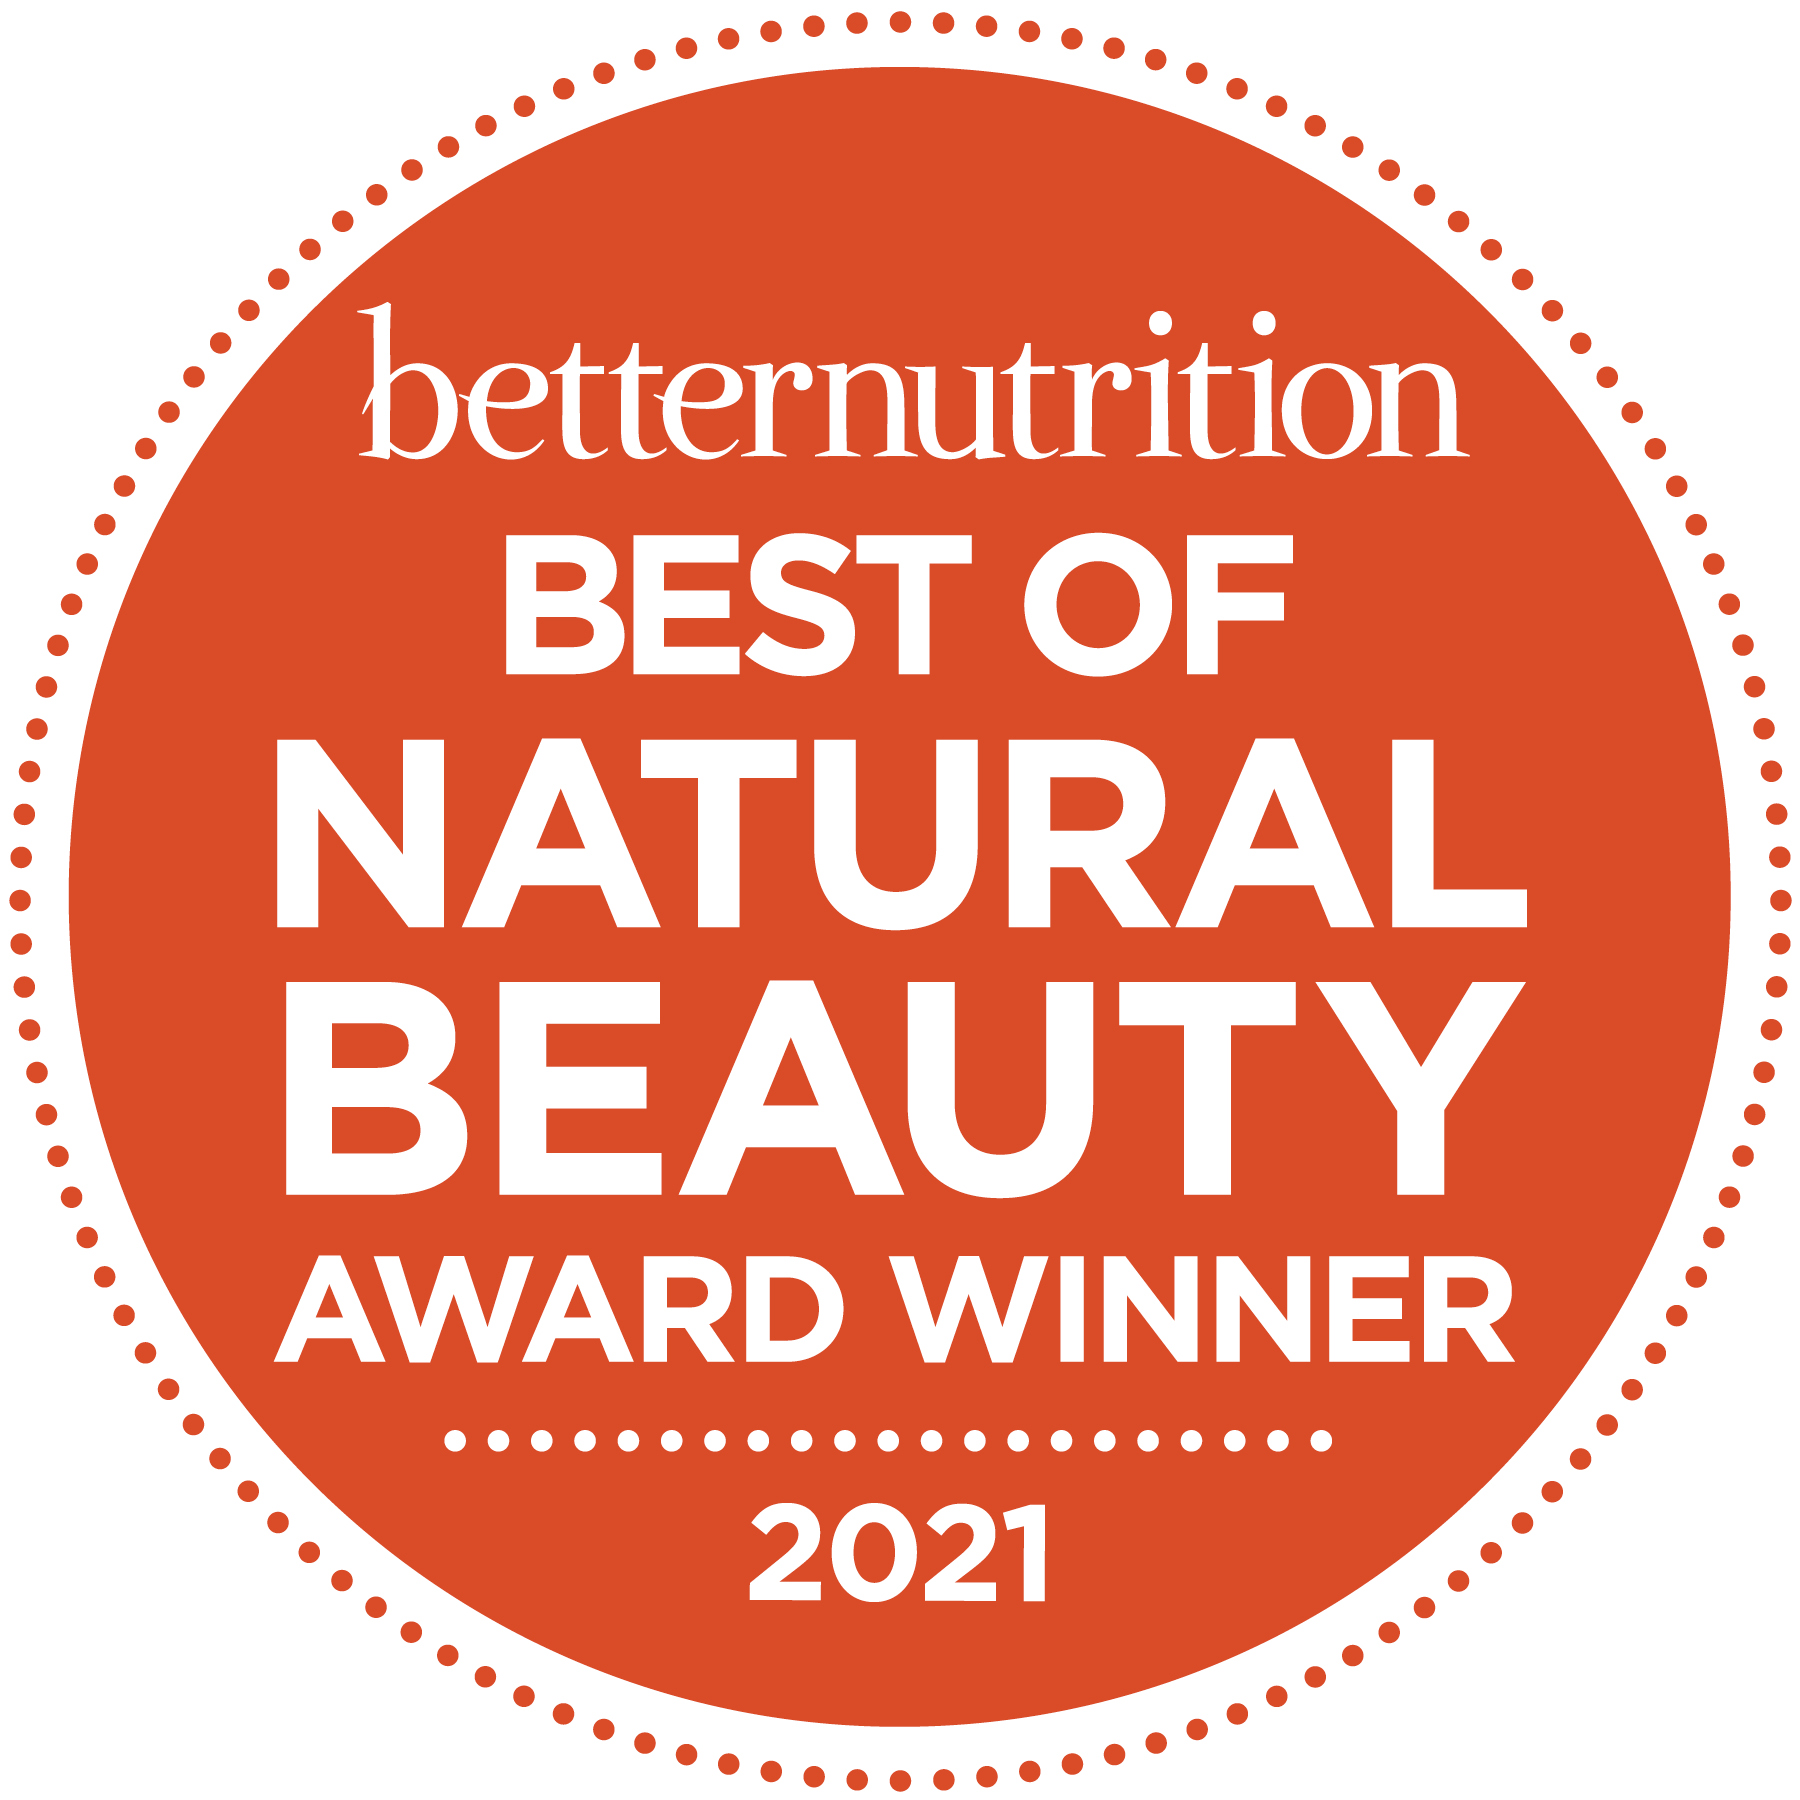 Derma E Product Awards - Natural Beauty Award Winner 2021